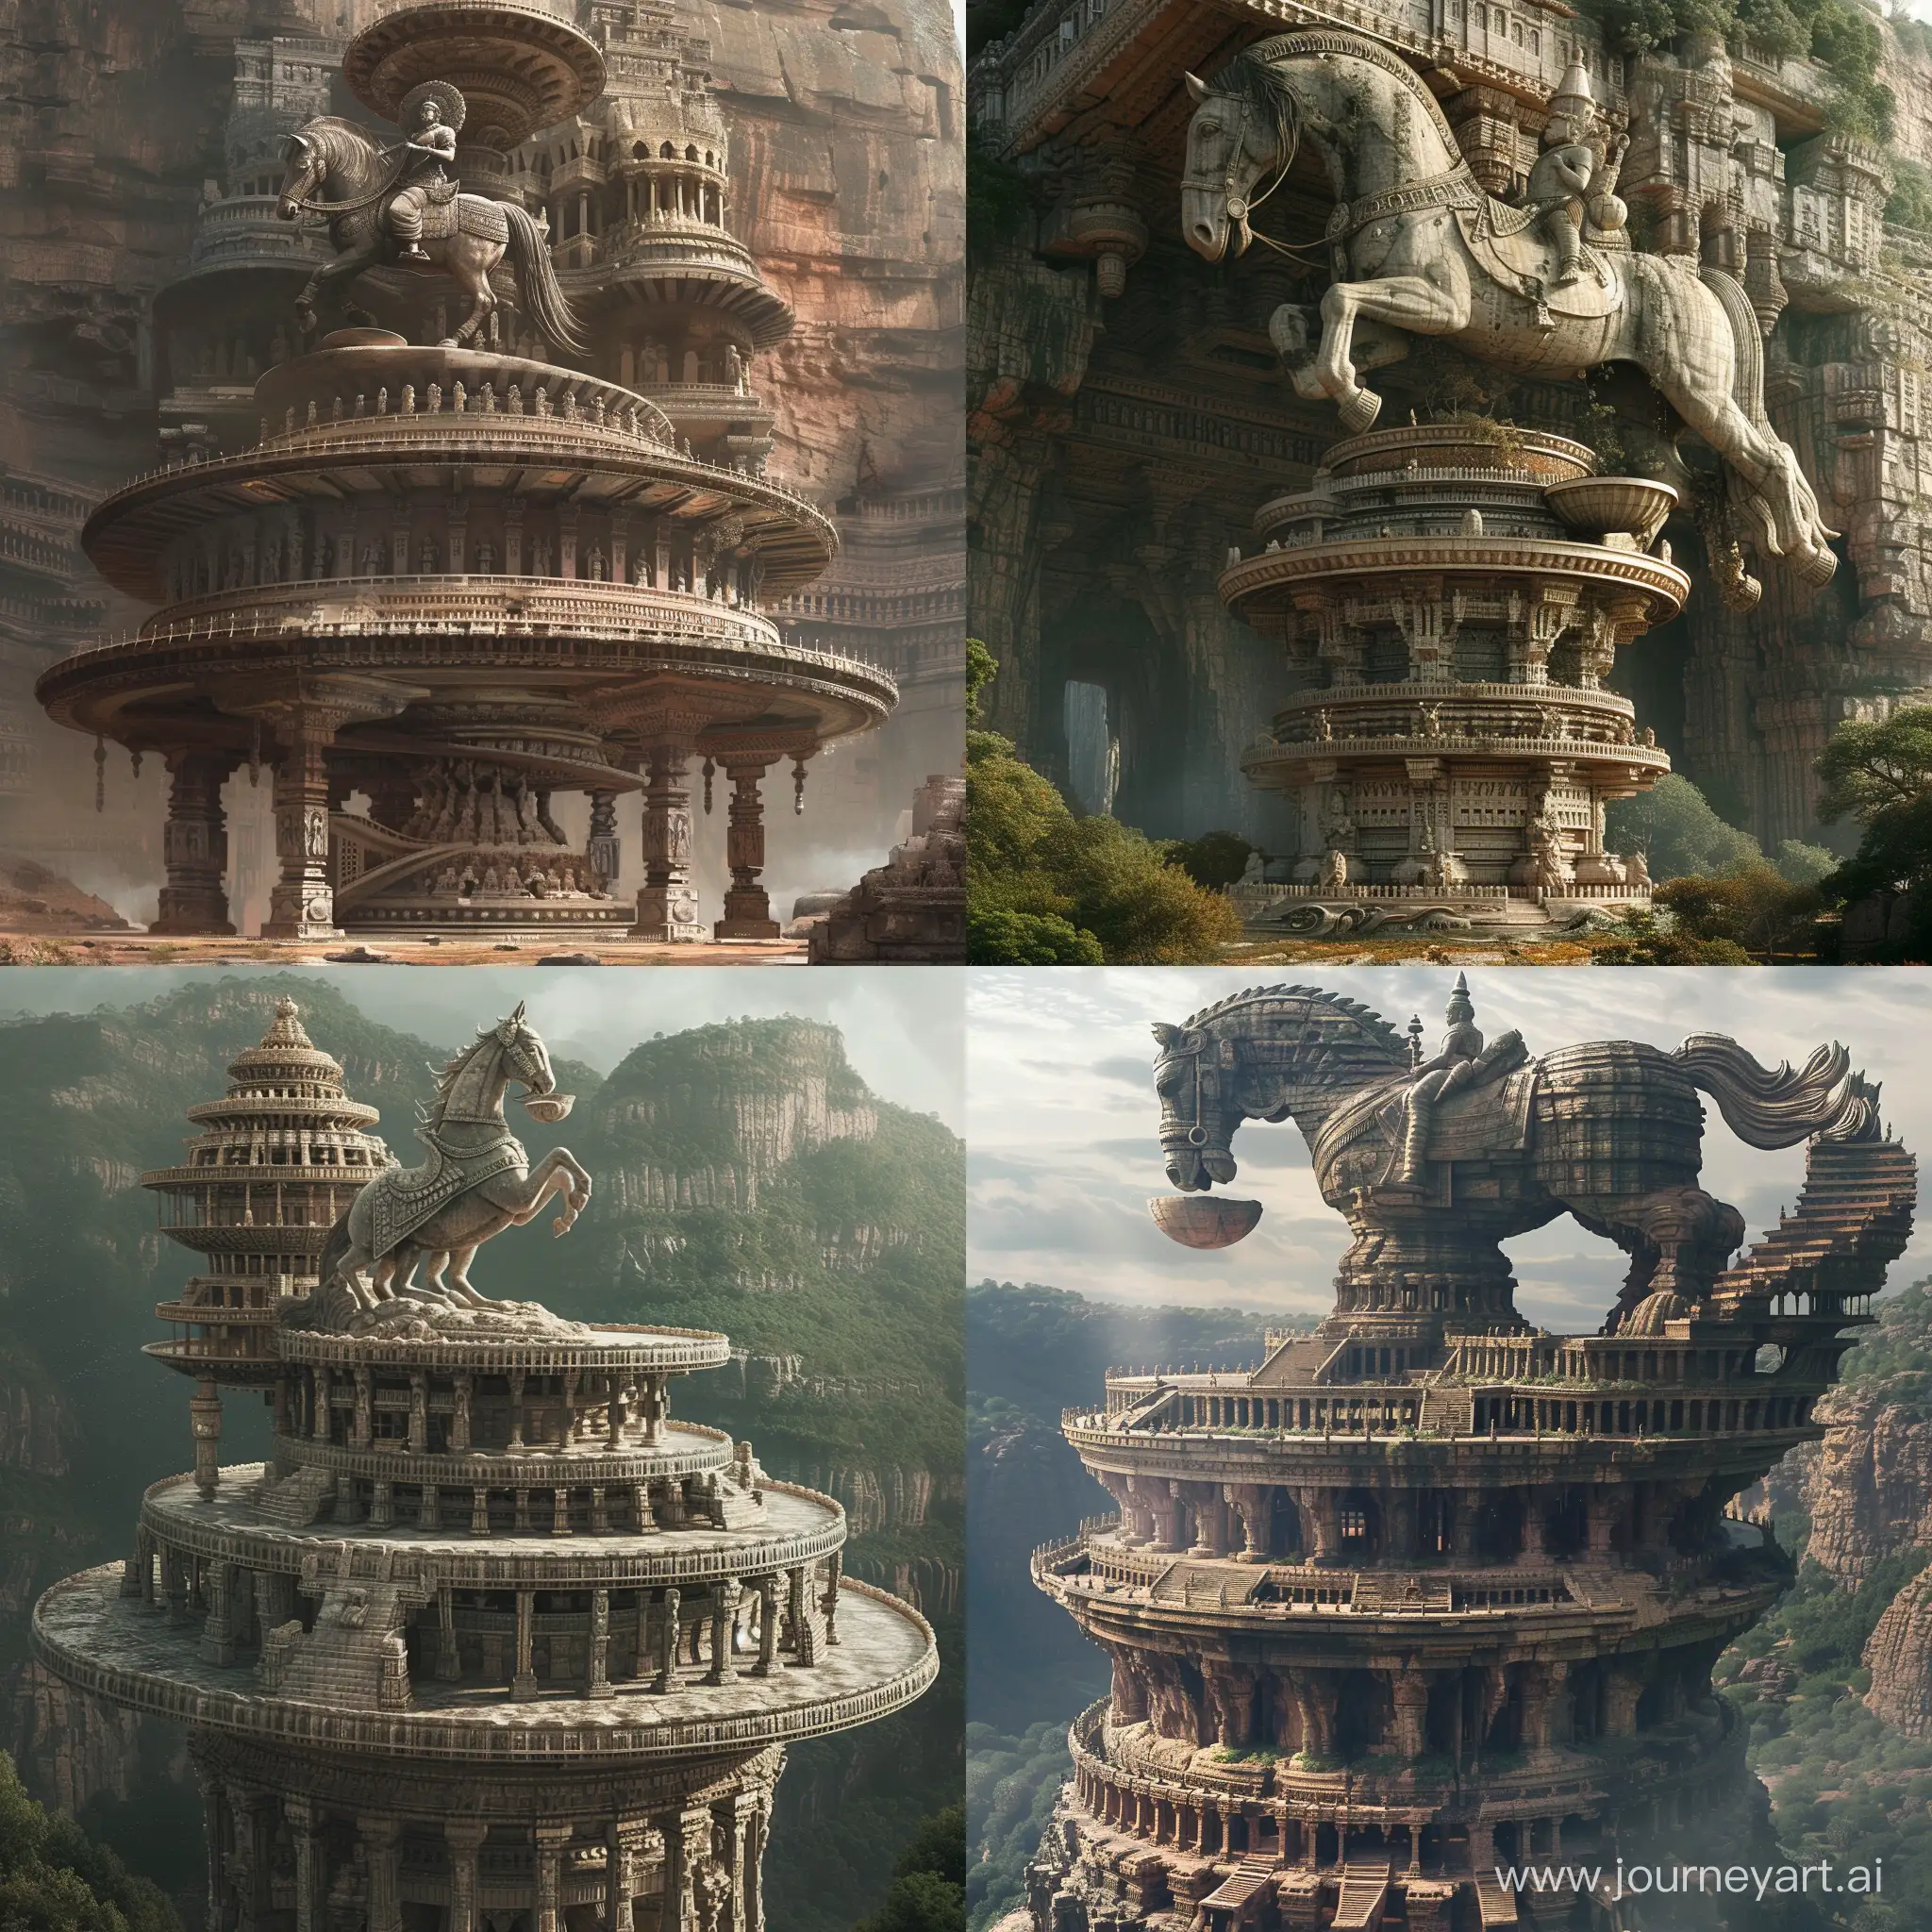 Majestic-Mountain-Temple-Unique-Horseman-Statue-and-Circular-Platforms